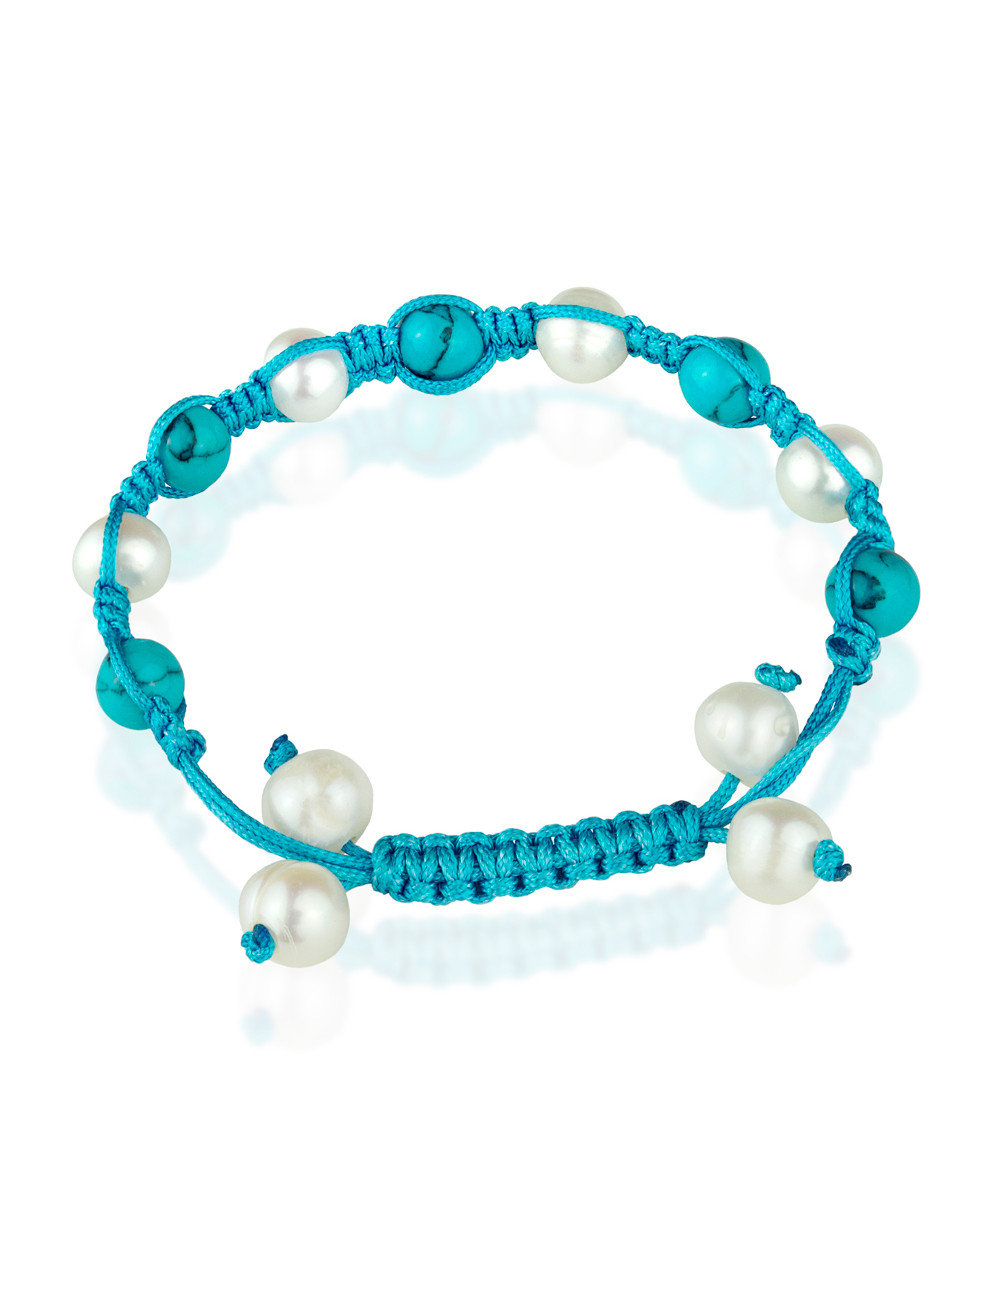 Turquoise braided bracelet white pearls and turkmenite BTU089